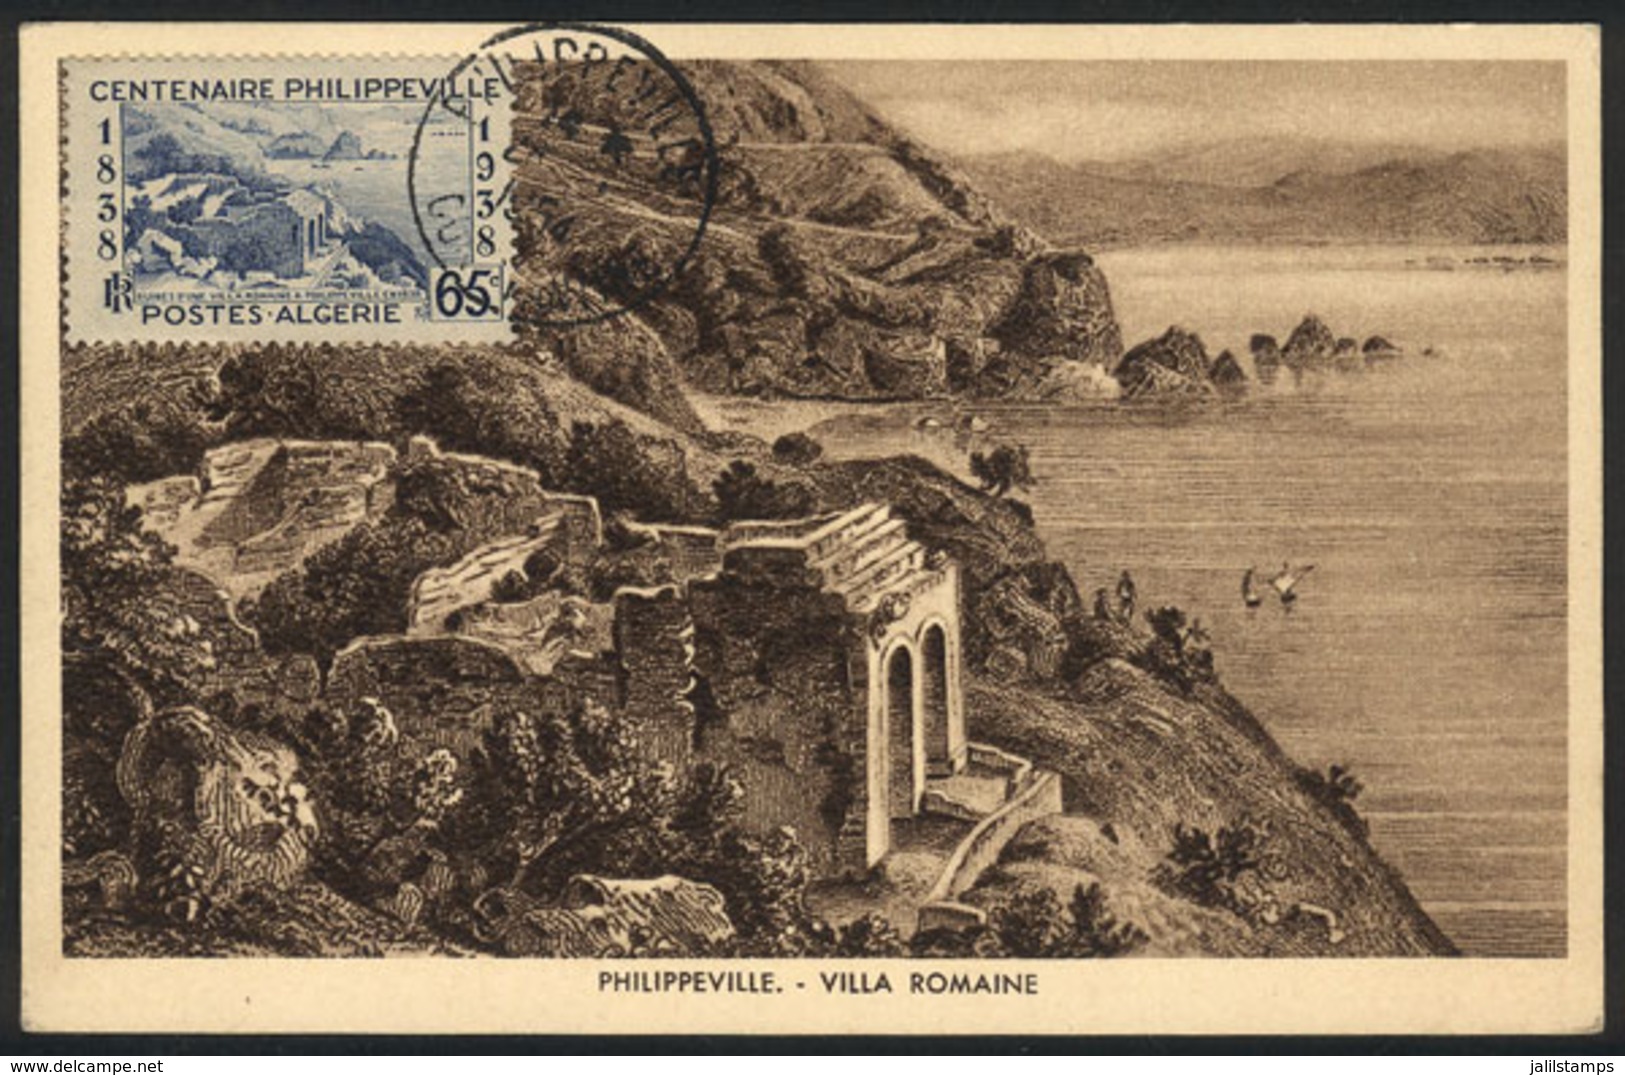 188 ALGERIA: PHILIPPEVILLE: Ruins Of A Roman Villa, Maximum Card Of MAY/1954, VF Quality - Maximum Cards